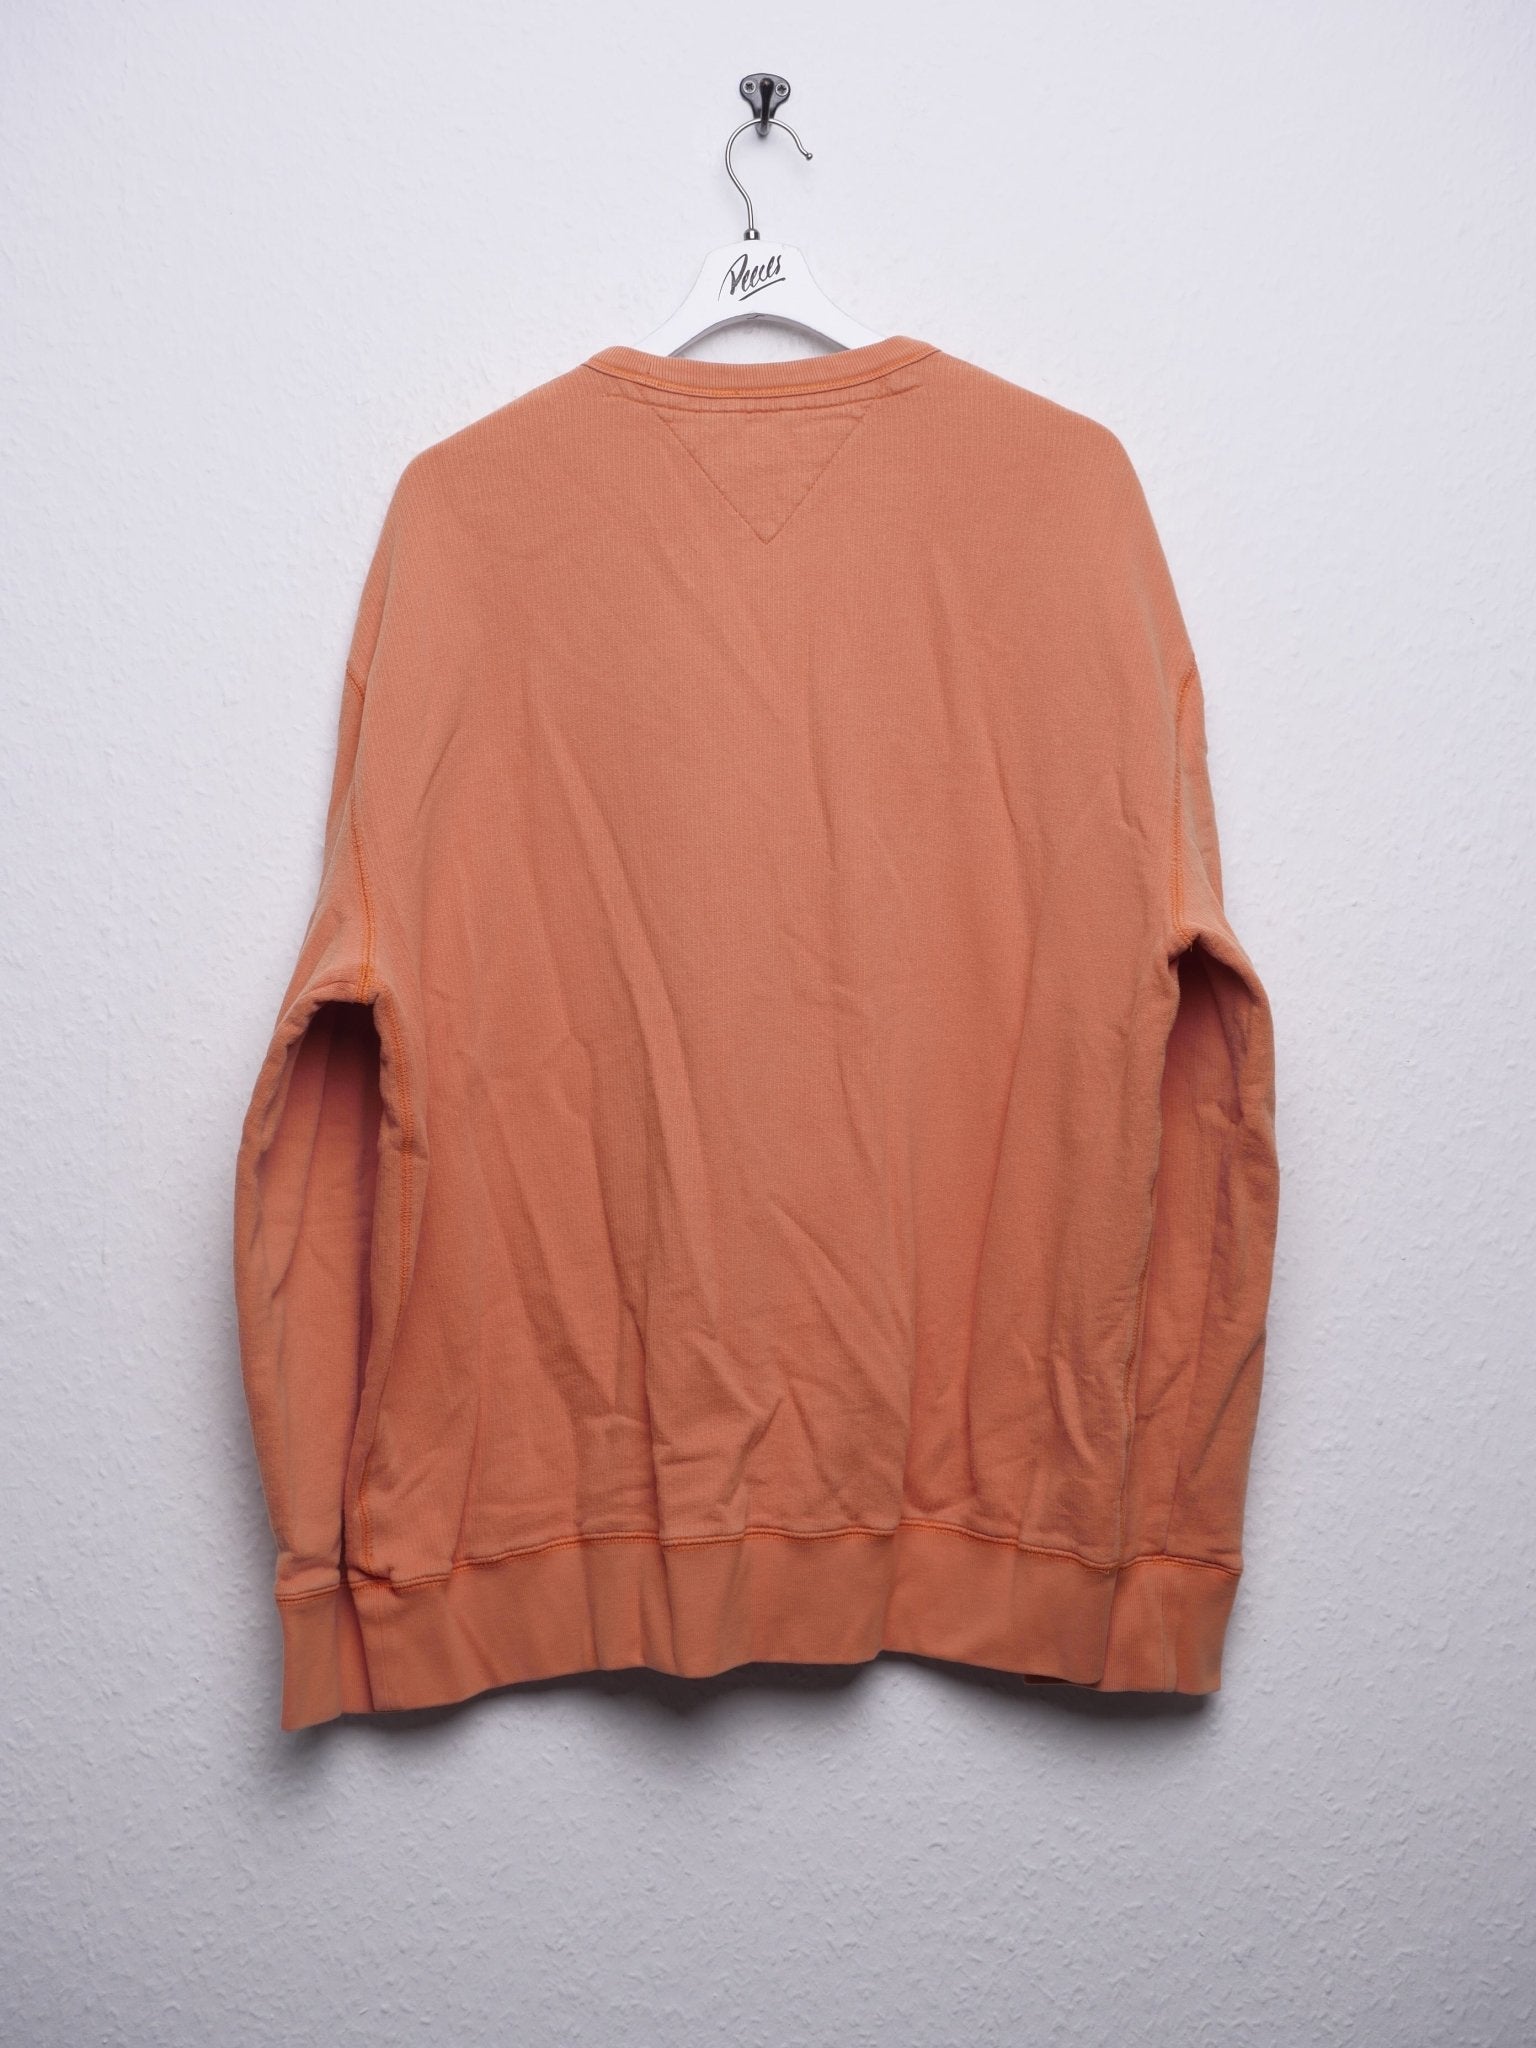 Tommy Hilfiger embroidered Logo Vintage light orange Sweater - Peeces